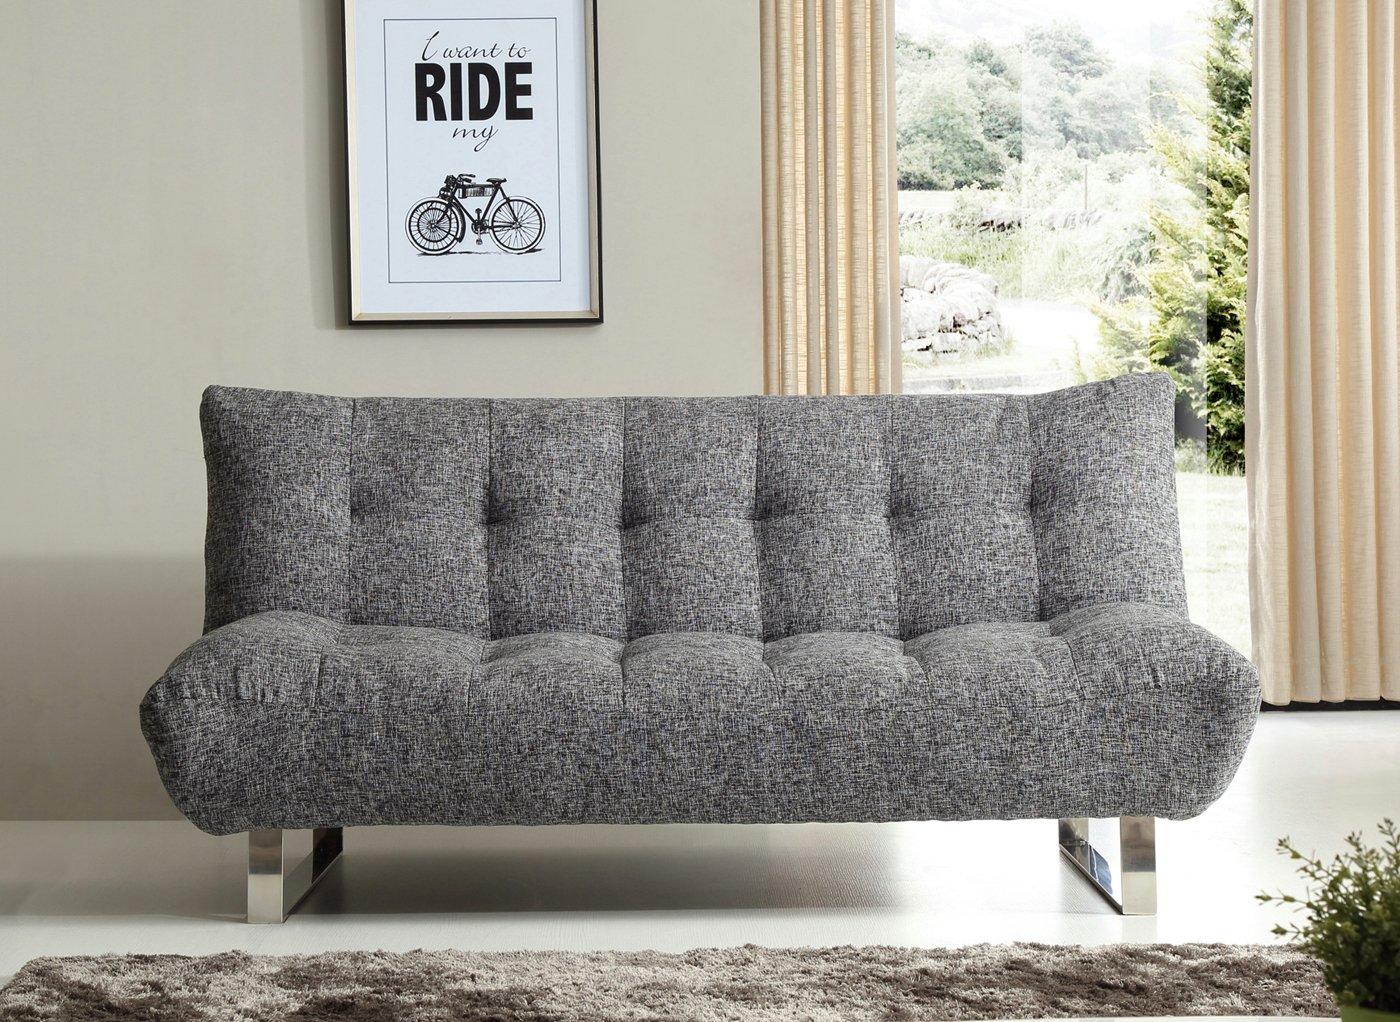 tyler grey sofa bed